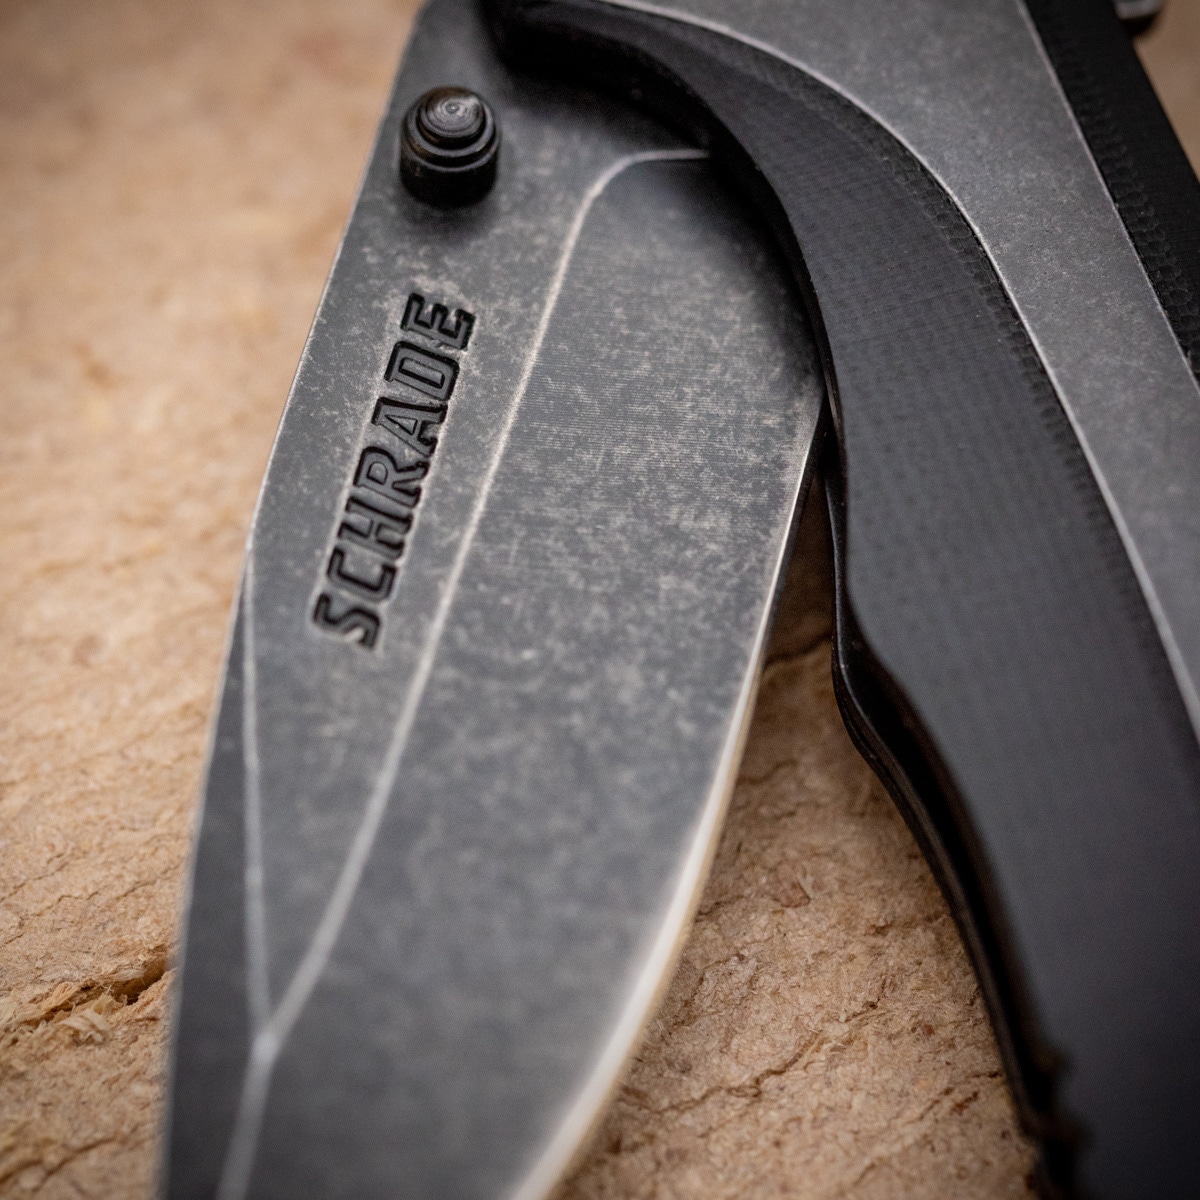 Nóż składany Schrade Drop Point Folding Knife G10 Handle